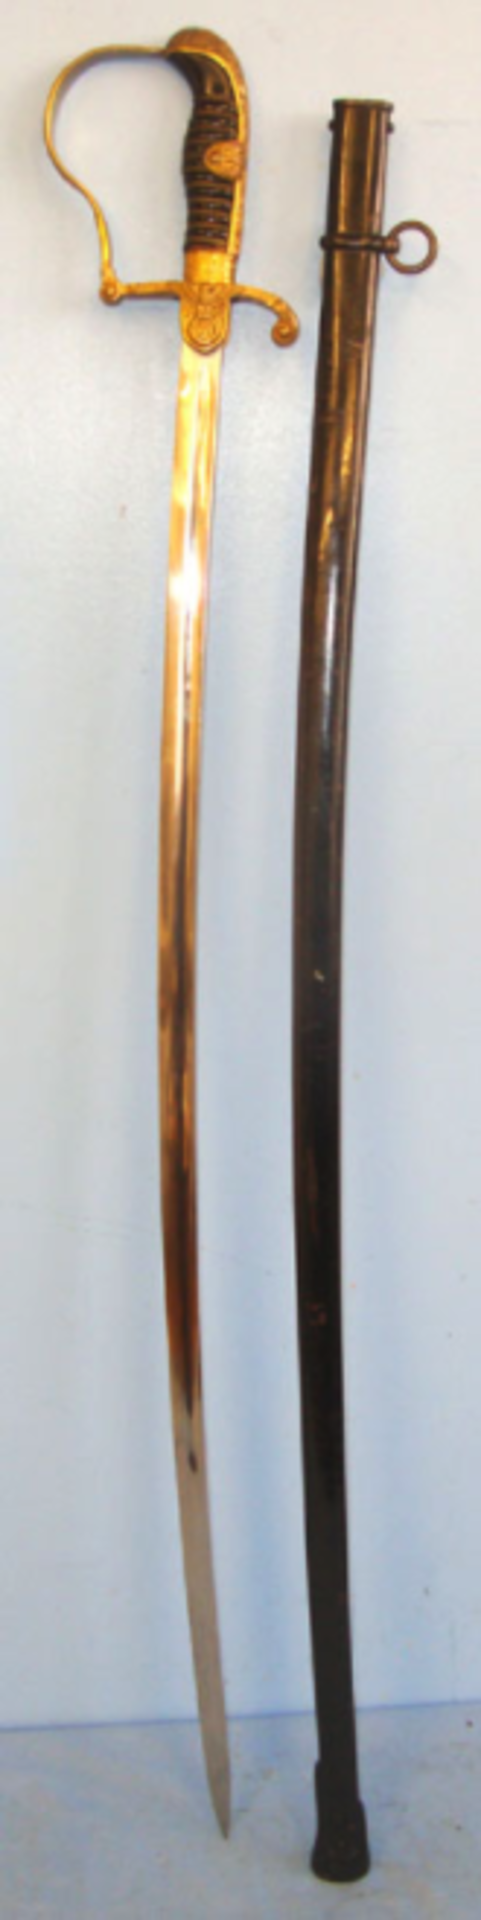 WW2 Era Nazi German Weyersberg Kirschbaum & Cie Solingen (WKC) German Army Officer's Sword - Image 2 of 3